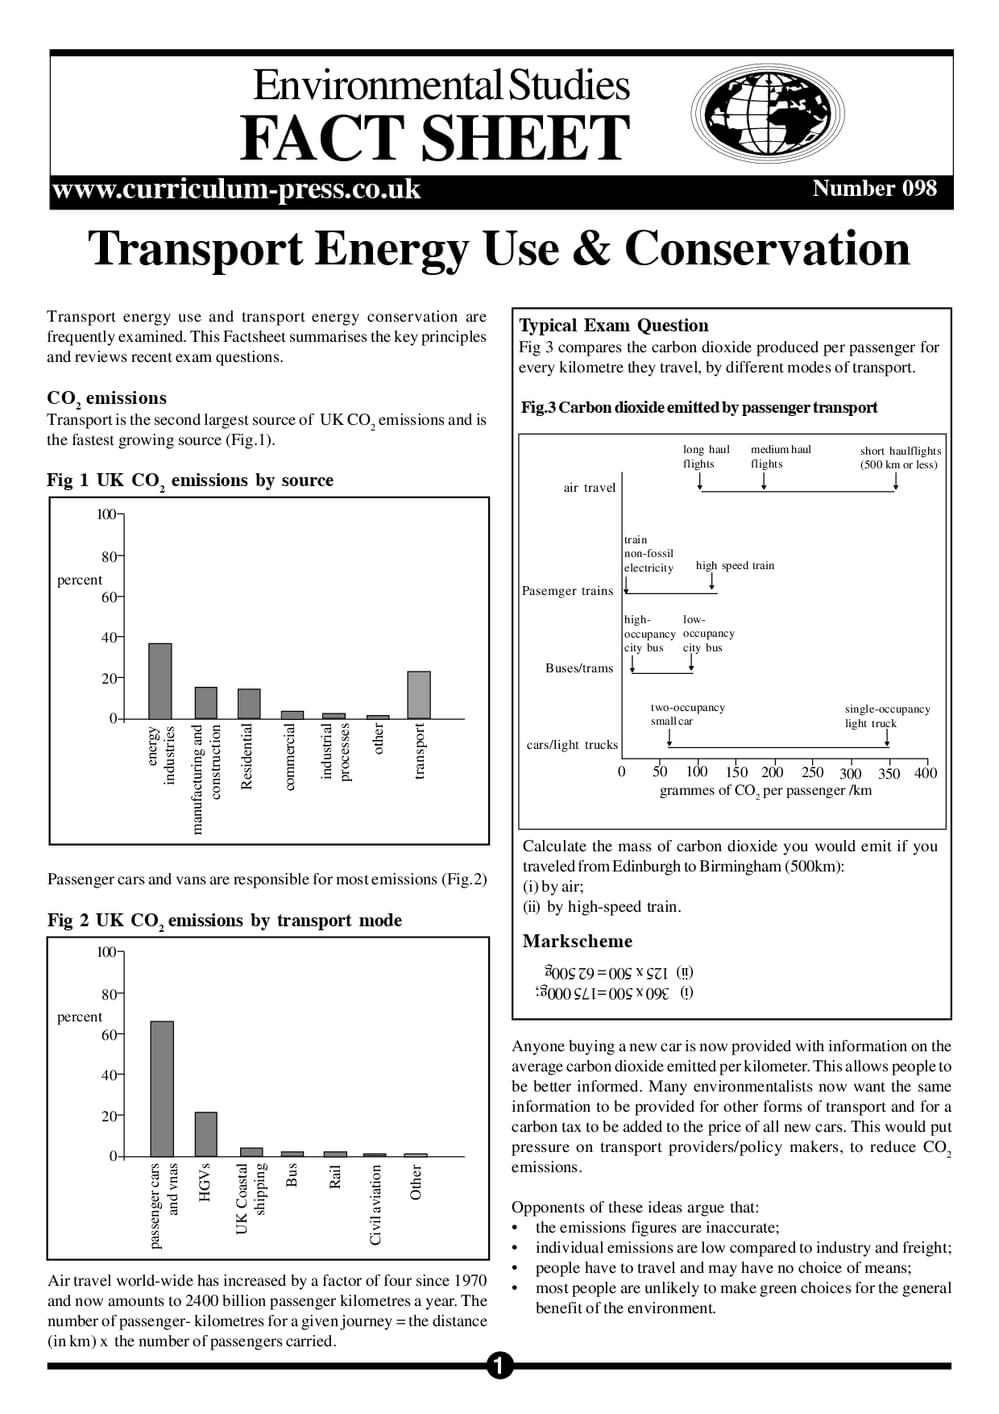 98 Trans Energy Cons